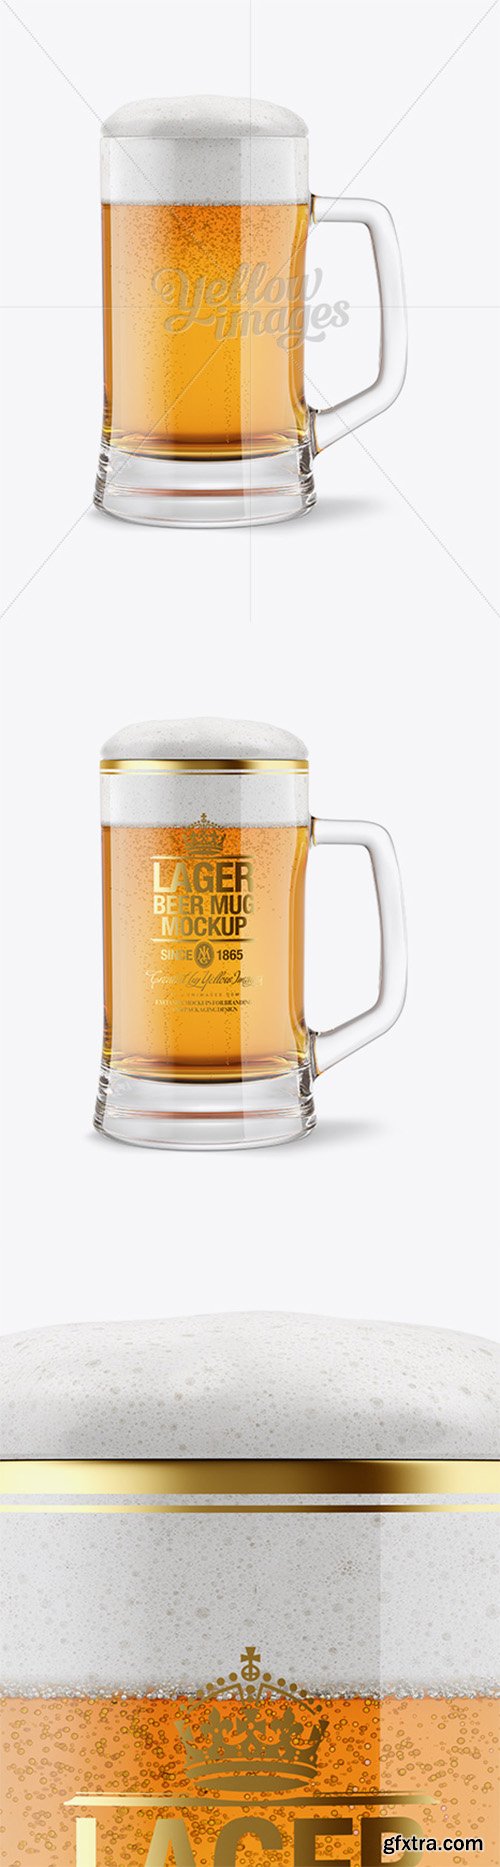 Tankard Glass Mug with Lager Beer Mockup 14664